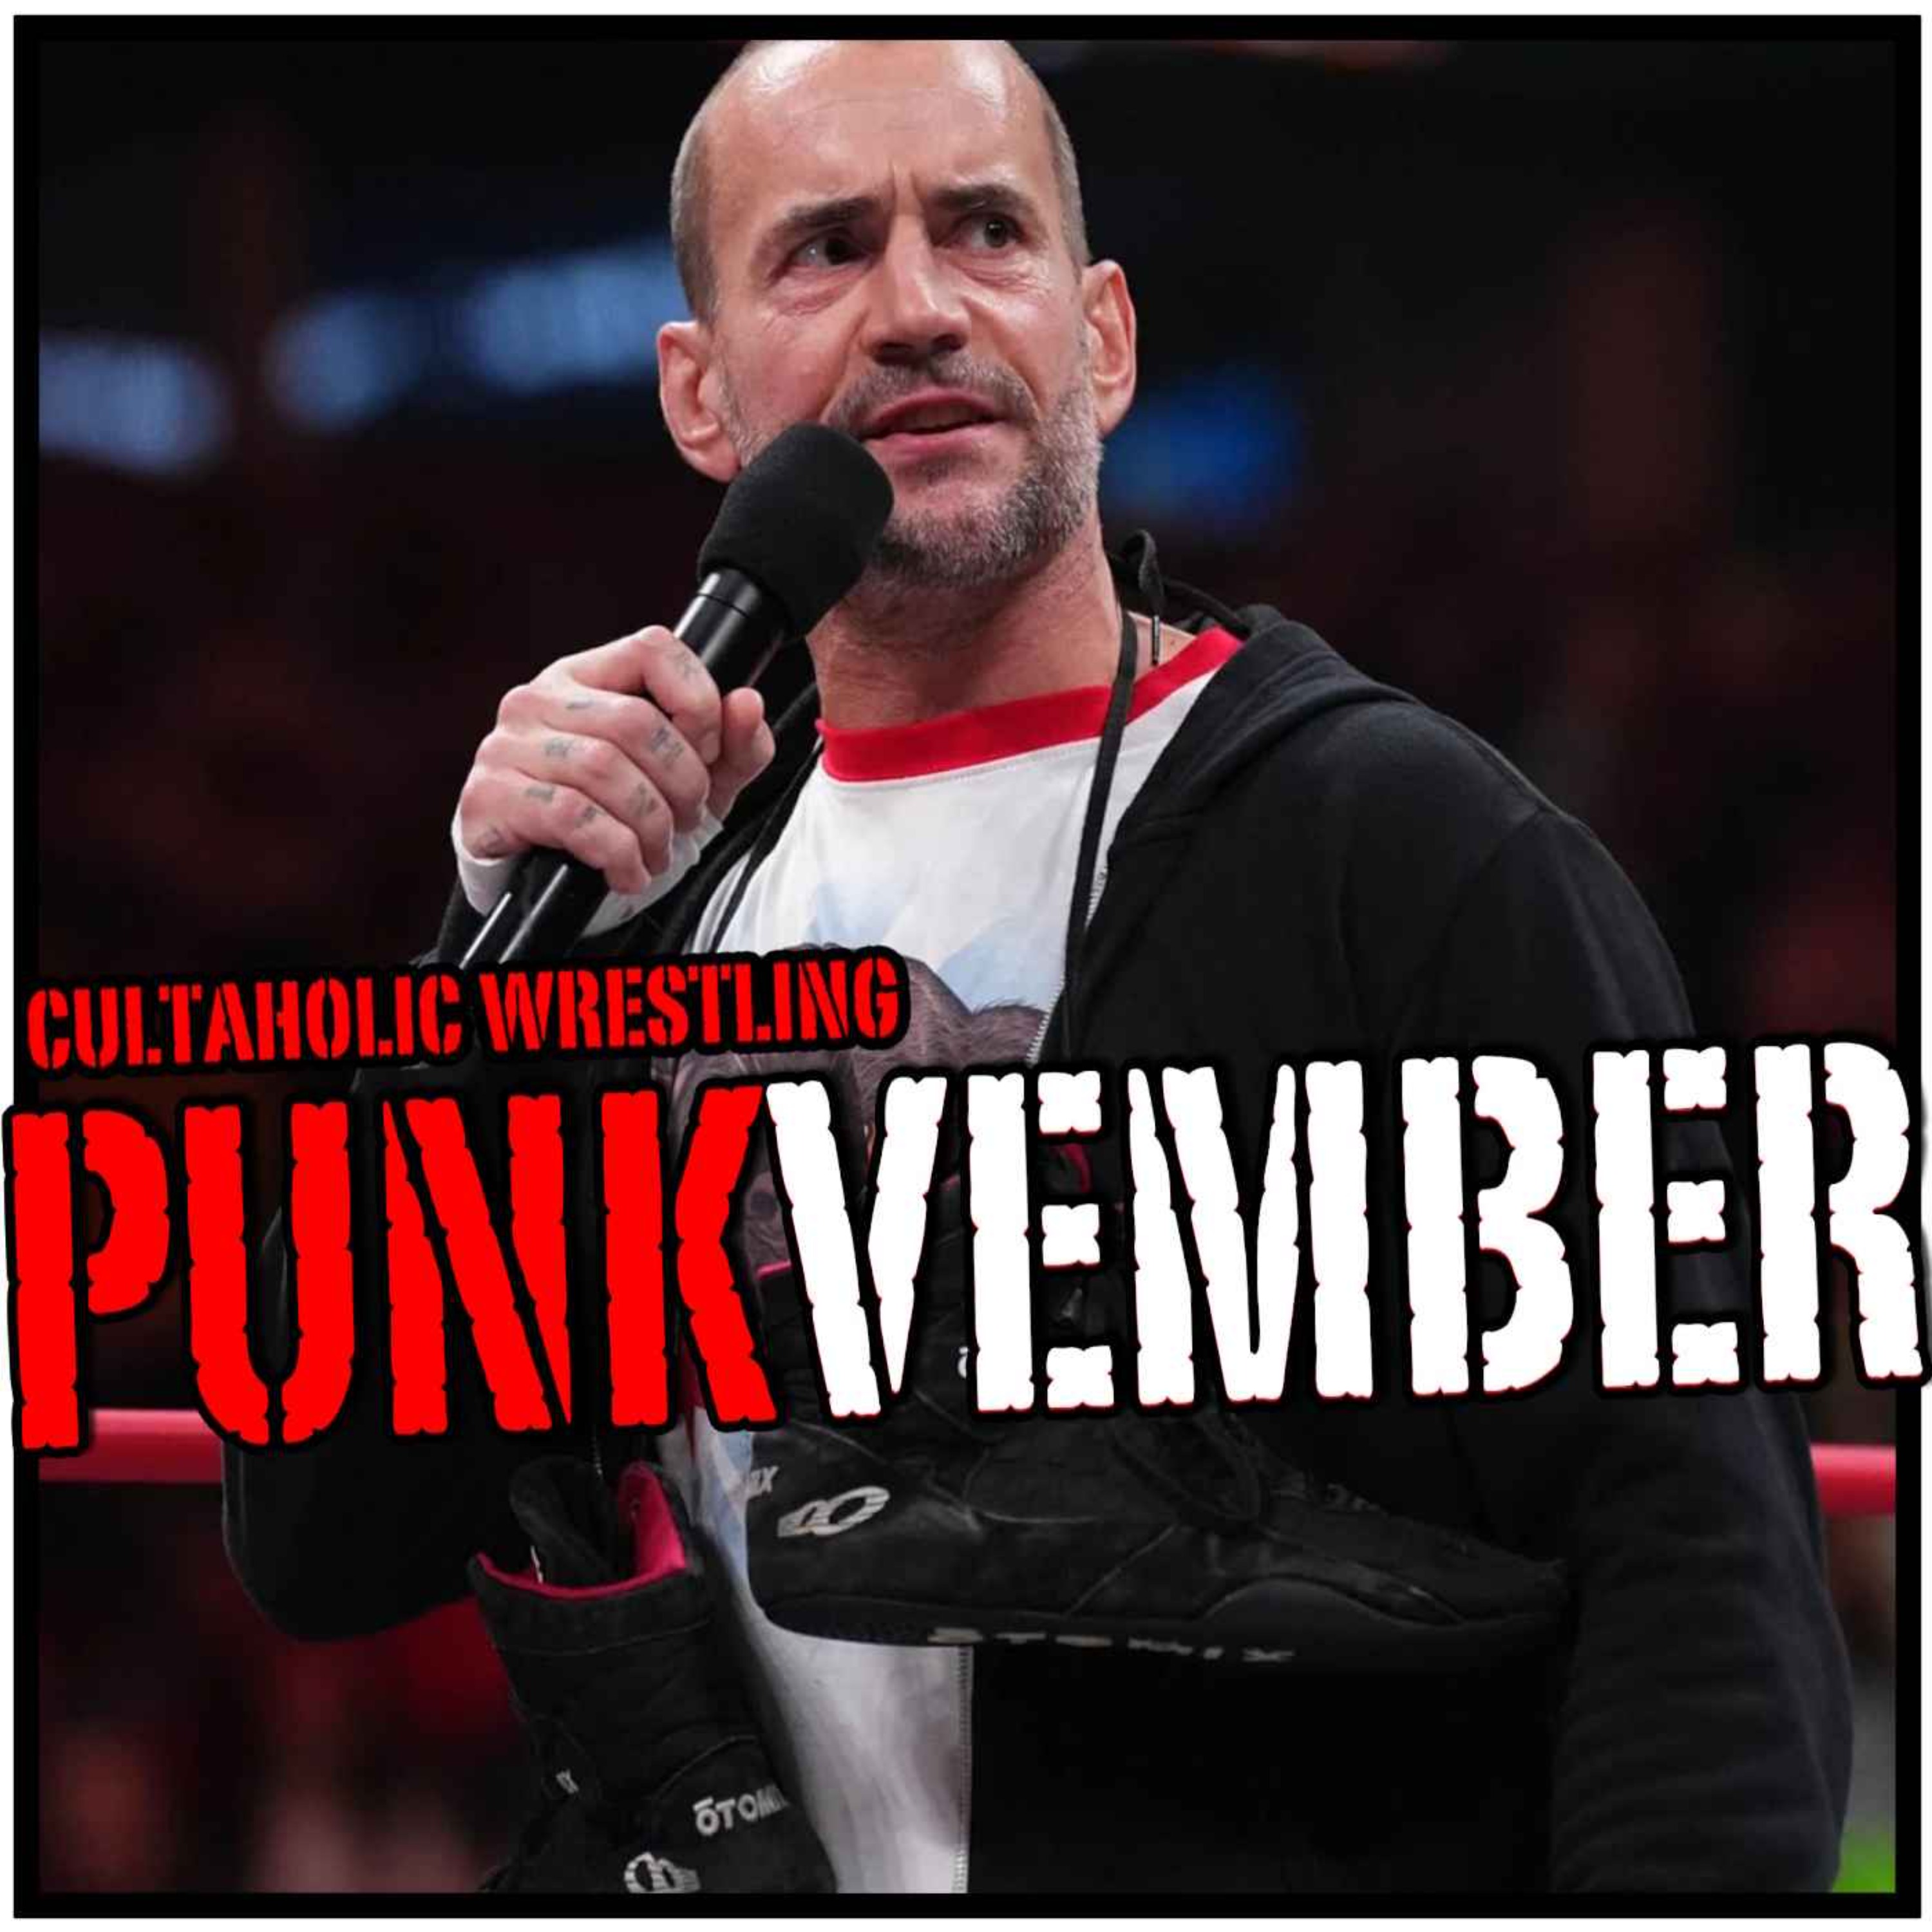 PUNKVEMBER: The CM Punk AEW Story - Episode 3 